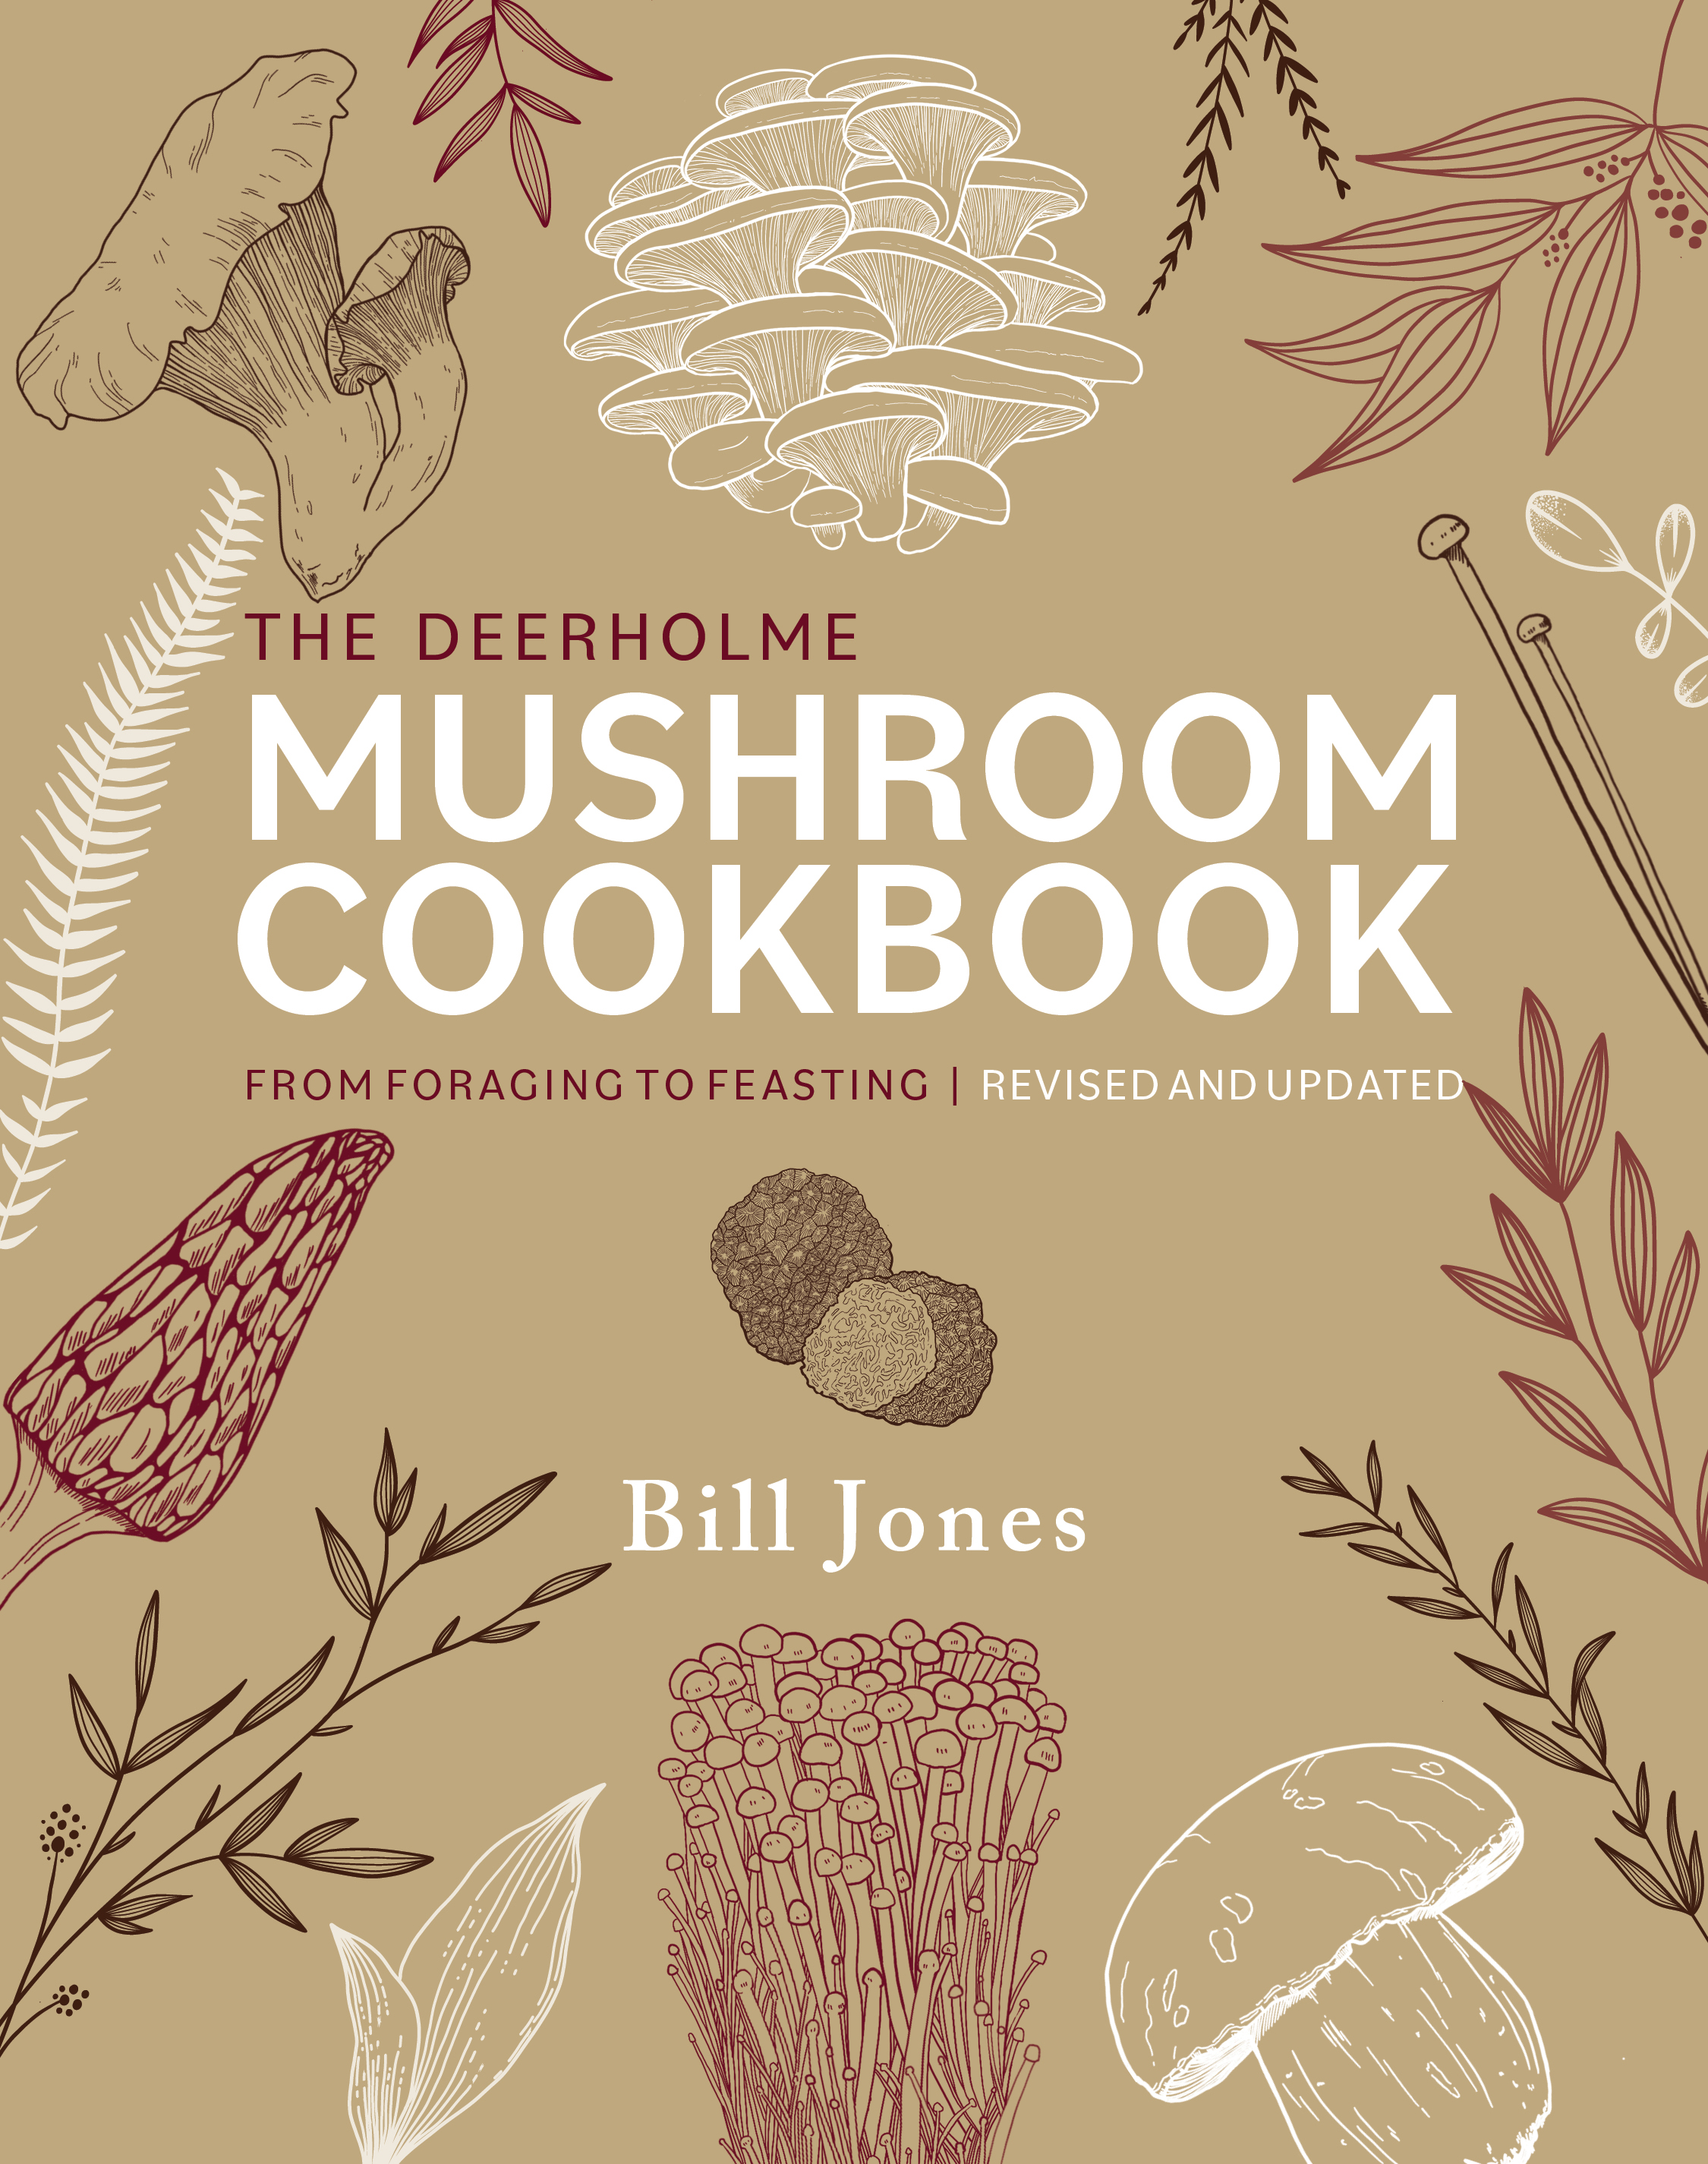 Deerholme Mushroom Cookbook, The